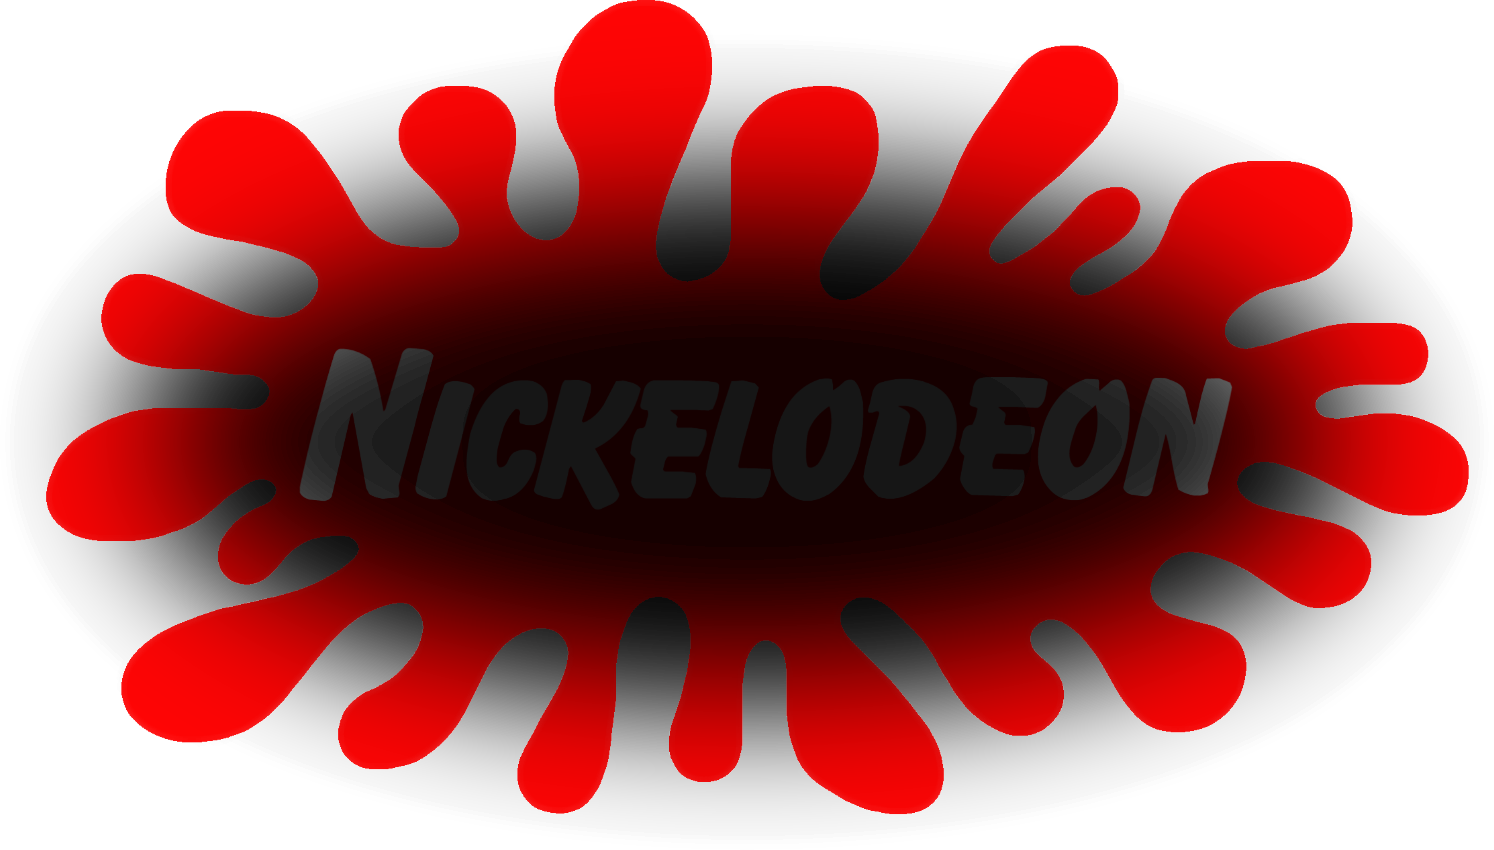 Nickelodeon Horror Logo by samsather2 on DeviantArt